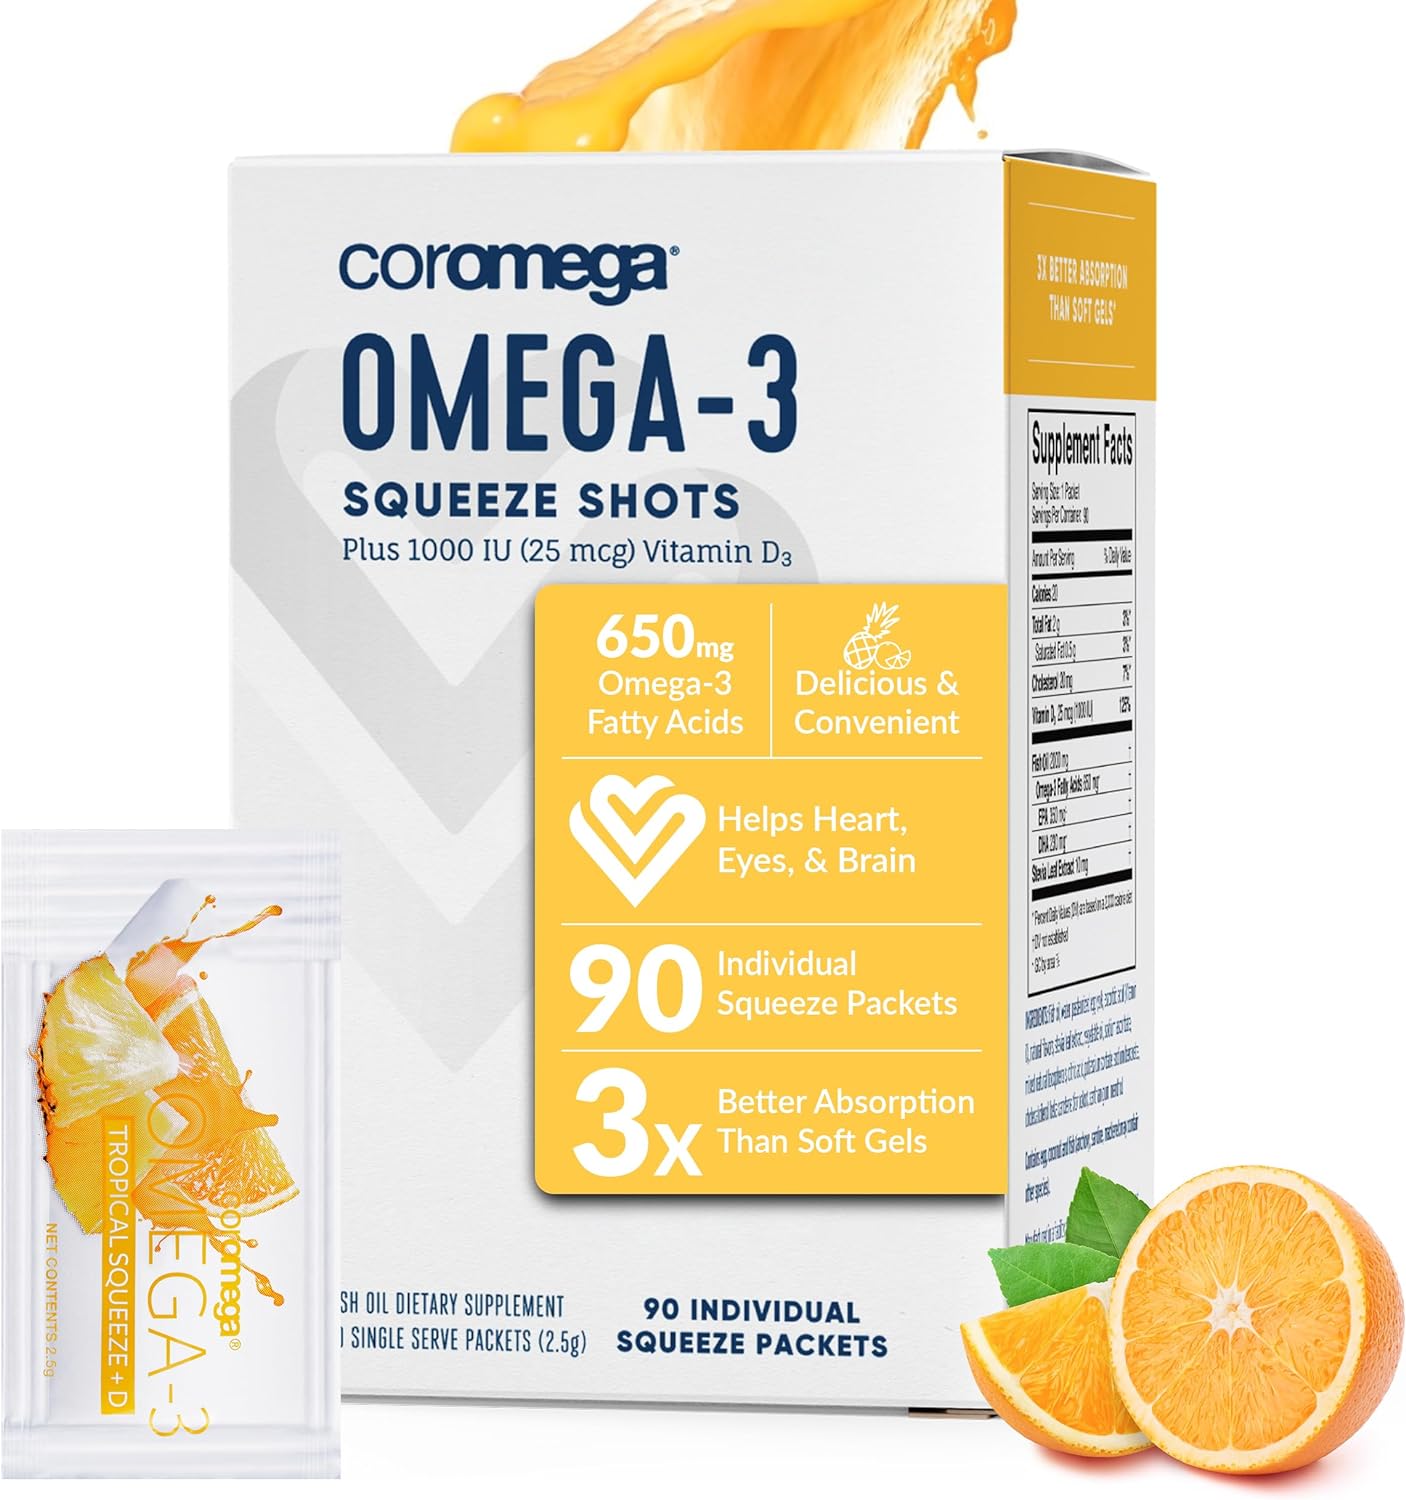 Coromega Omega 3 Fish Oil Supplement with Vitamin D3, 650mg of Omega-3